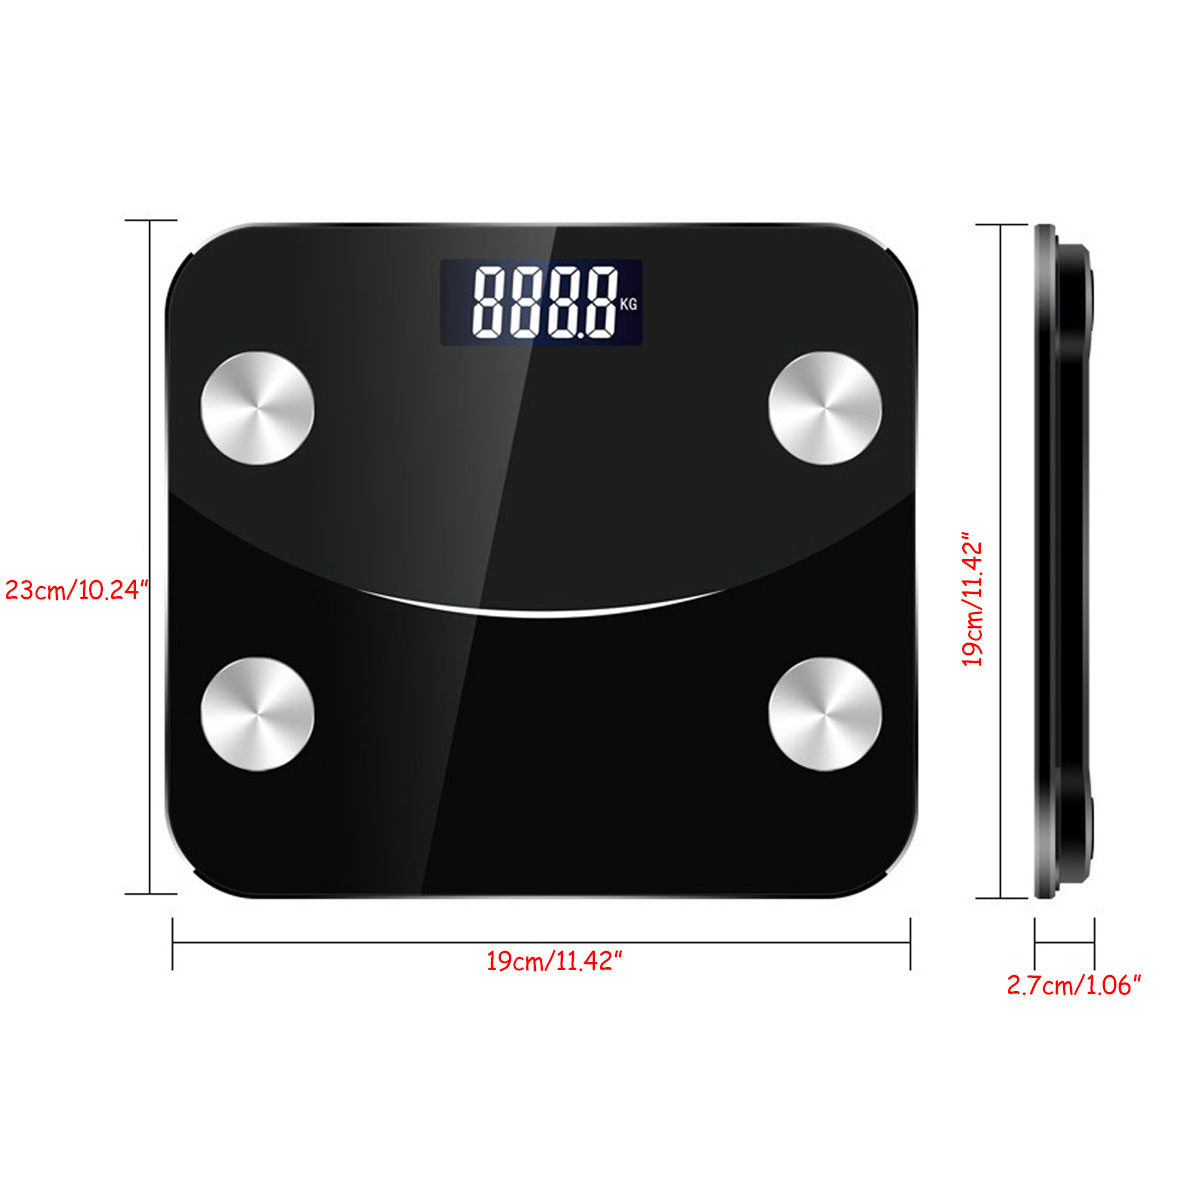 180KG-Measurement-Range-Bluetooth-Weight-Scale-With-Smart-APP-LED-Digital-Display-Bathroom-Body-Weig-1706885-7